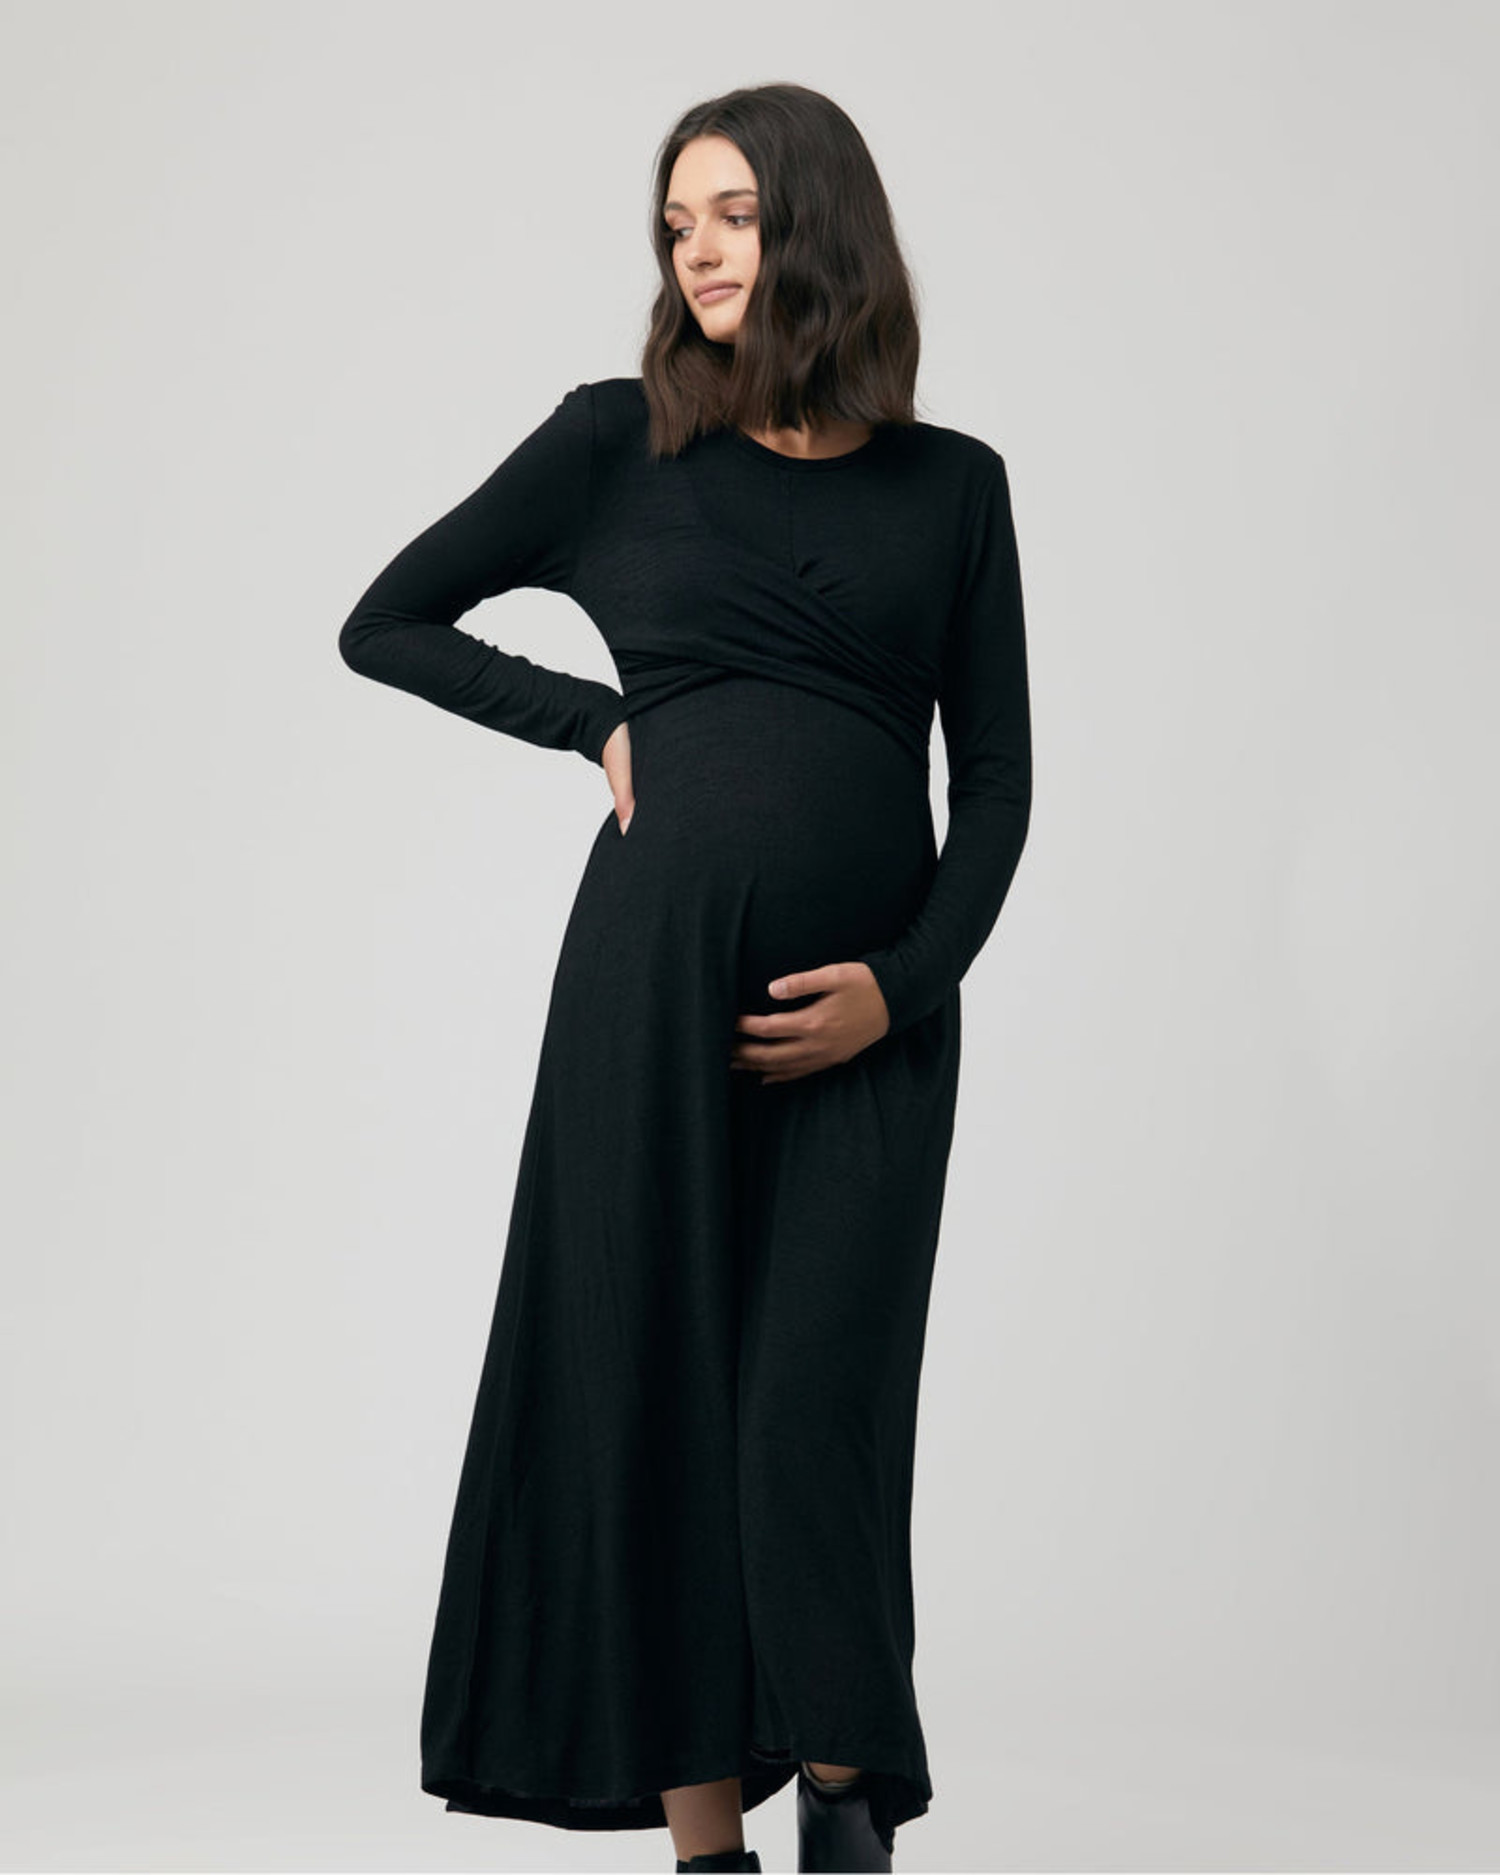 Jersey maternity dress with nursing access, Maternity dress / Nursing dress